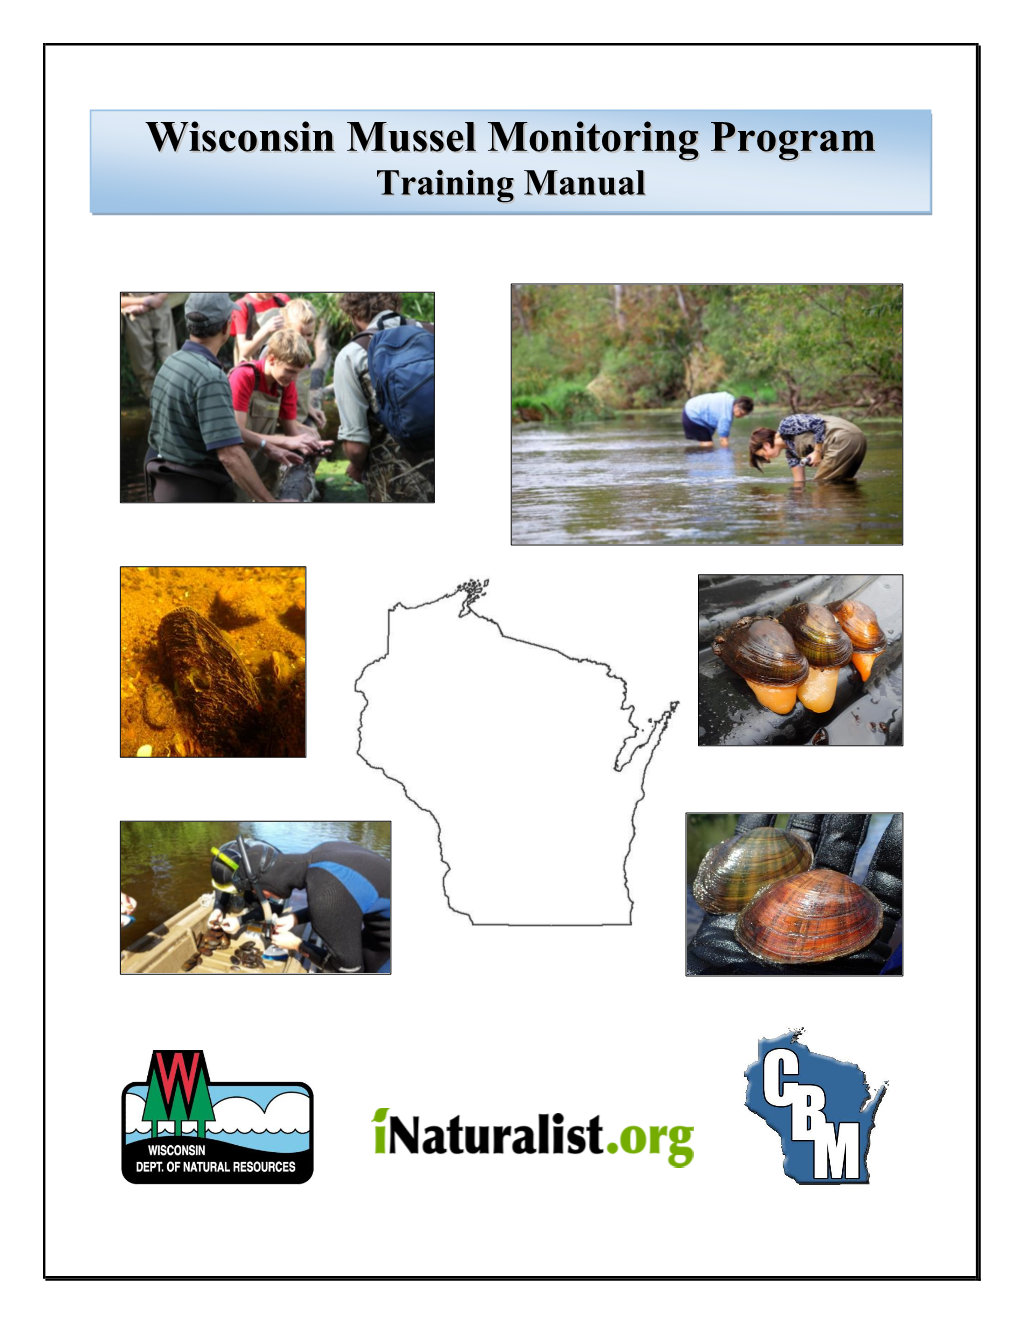 Mussel Monitoring Program of Wisconsin